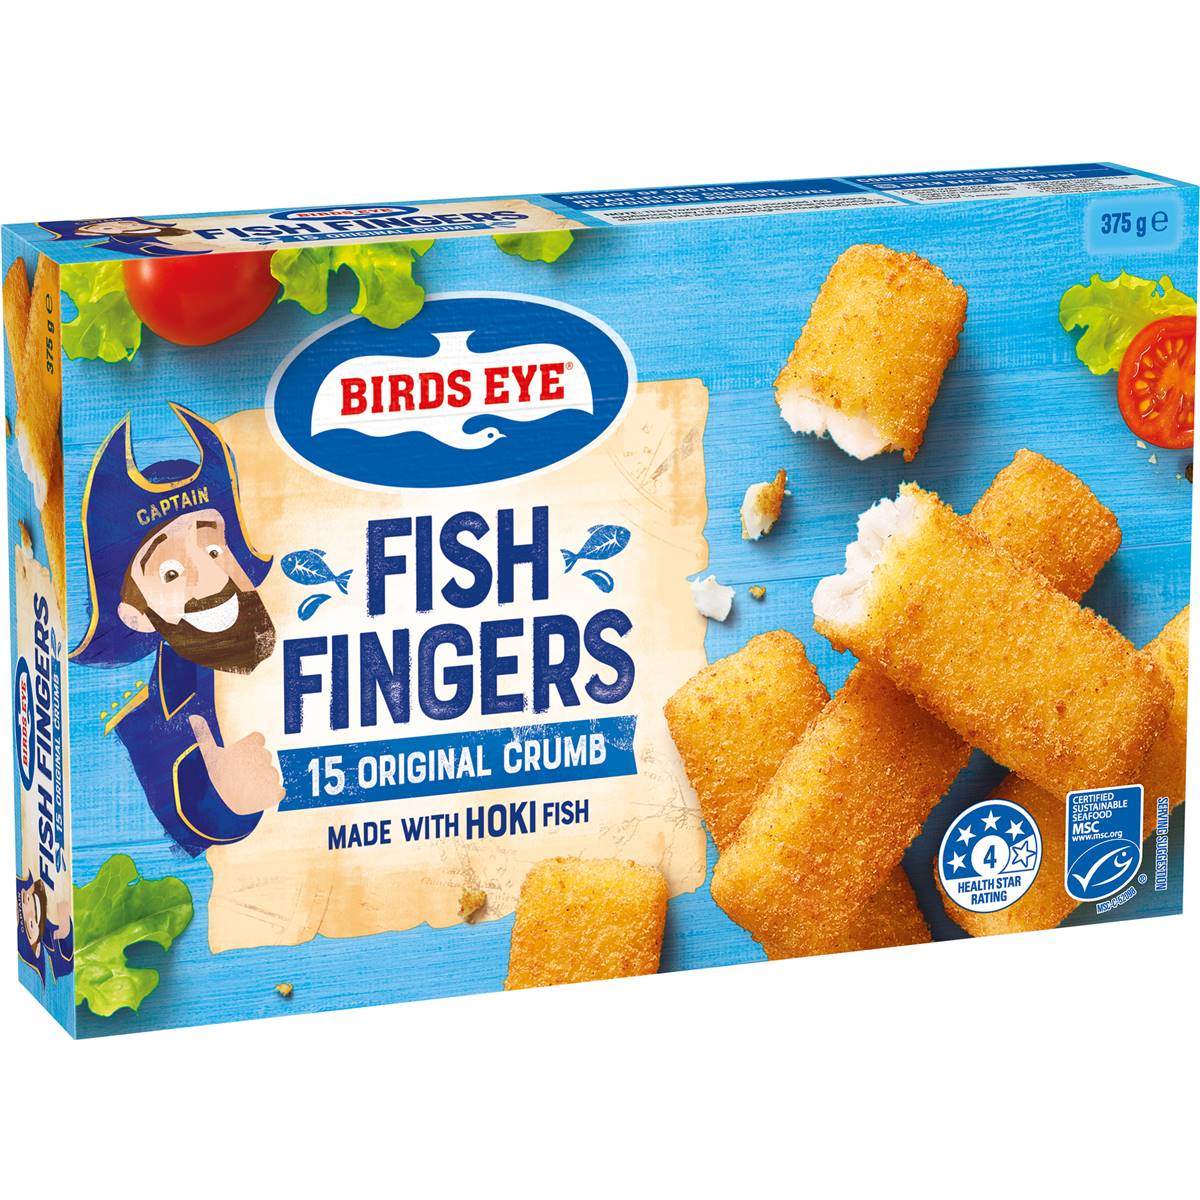 Birds Eye Fish Fingers 375g is halal suitable